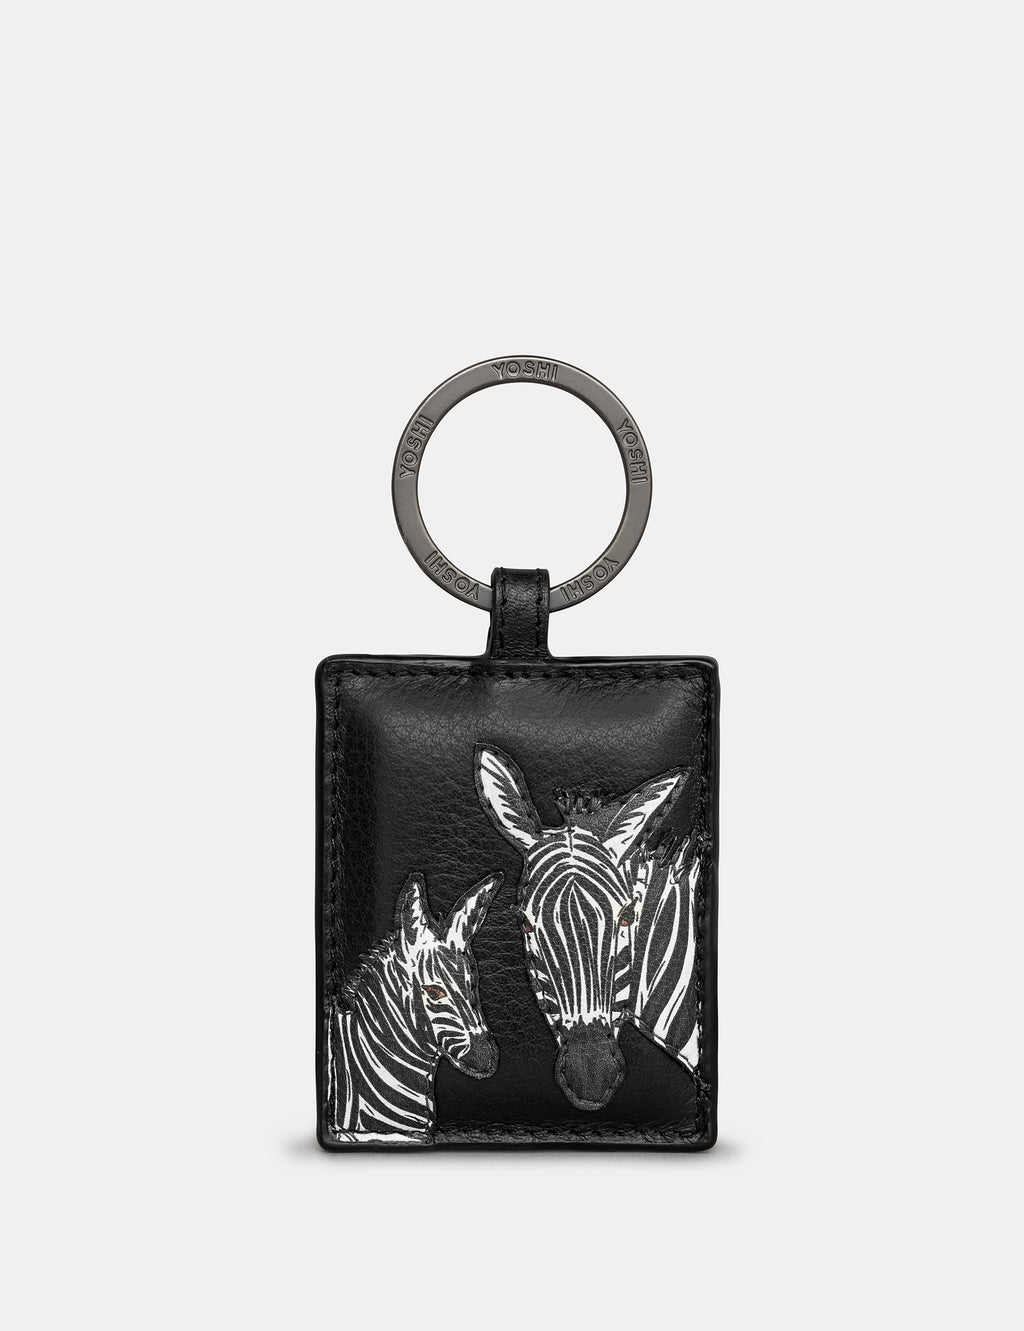 Dazzle of Zebras Black Leather Keyring